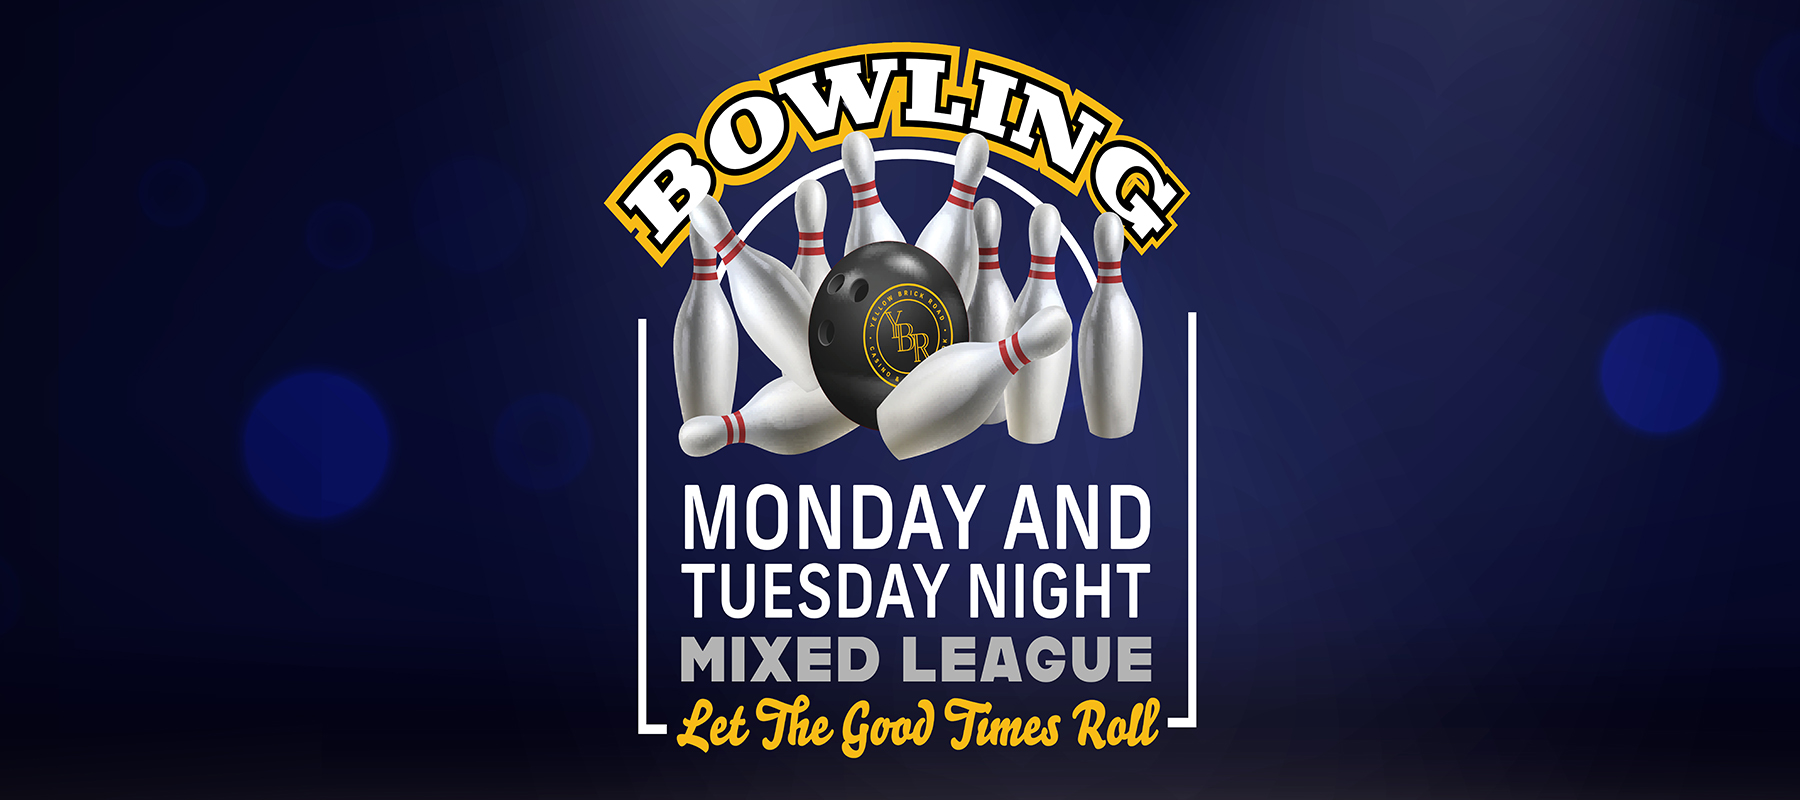 Bowling Tuesday Night Mixed League